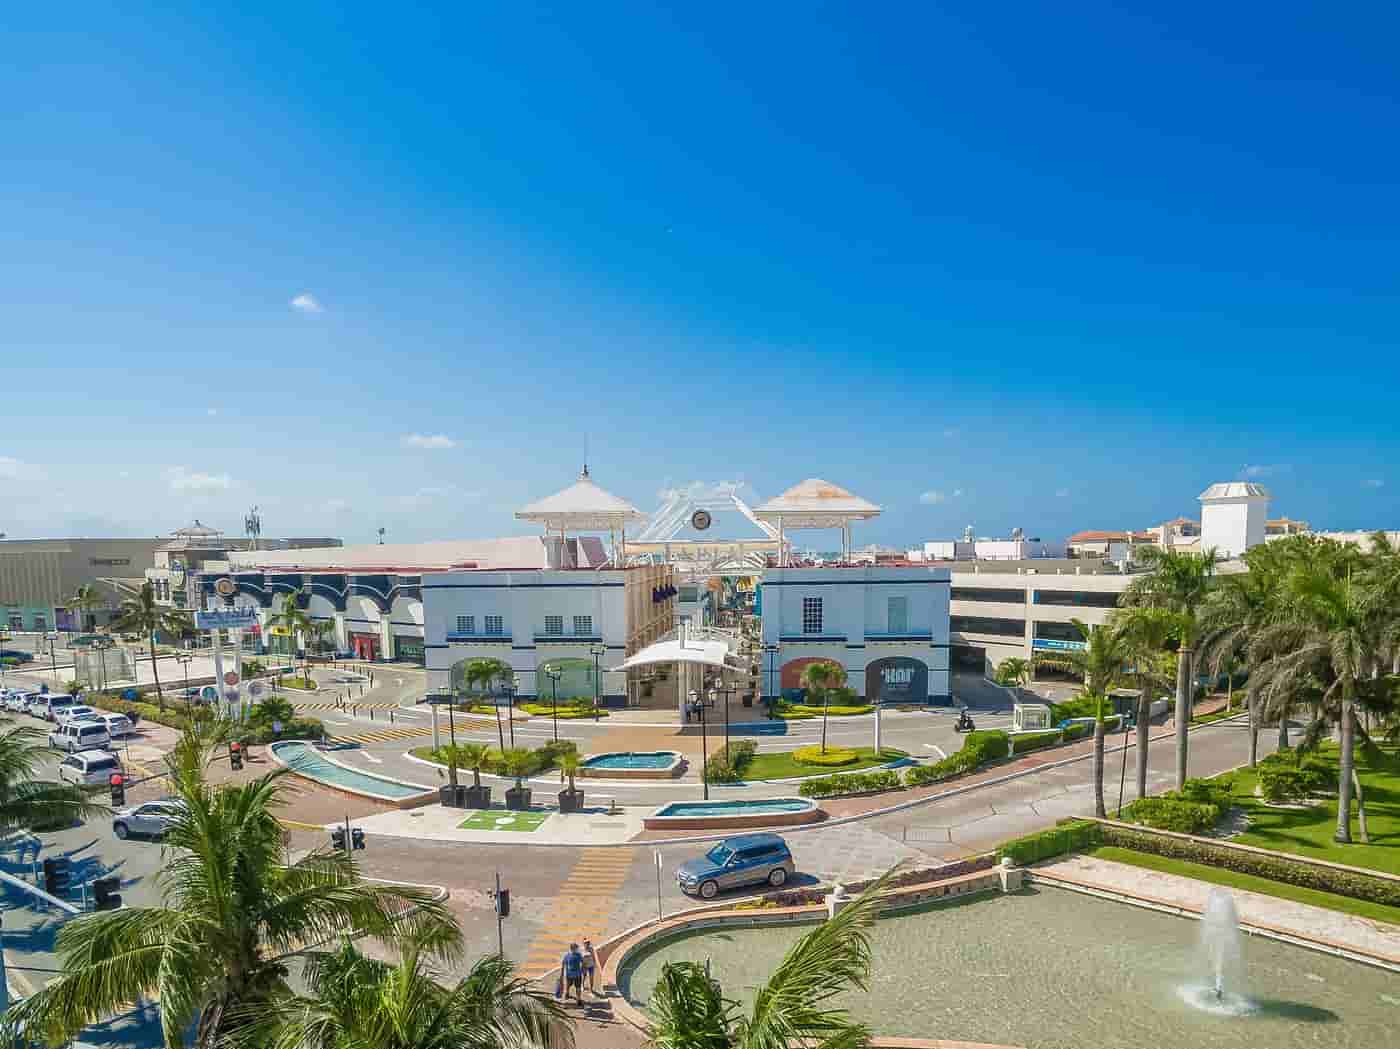 Best Malls in Cancun : Plaza La Isla Mall Cancun